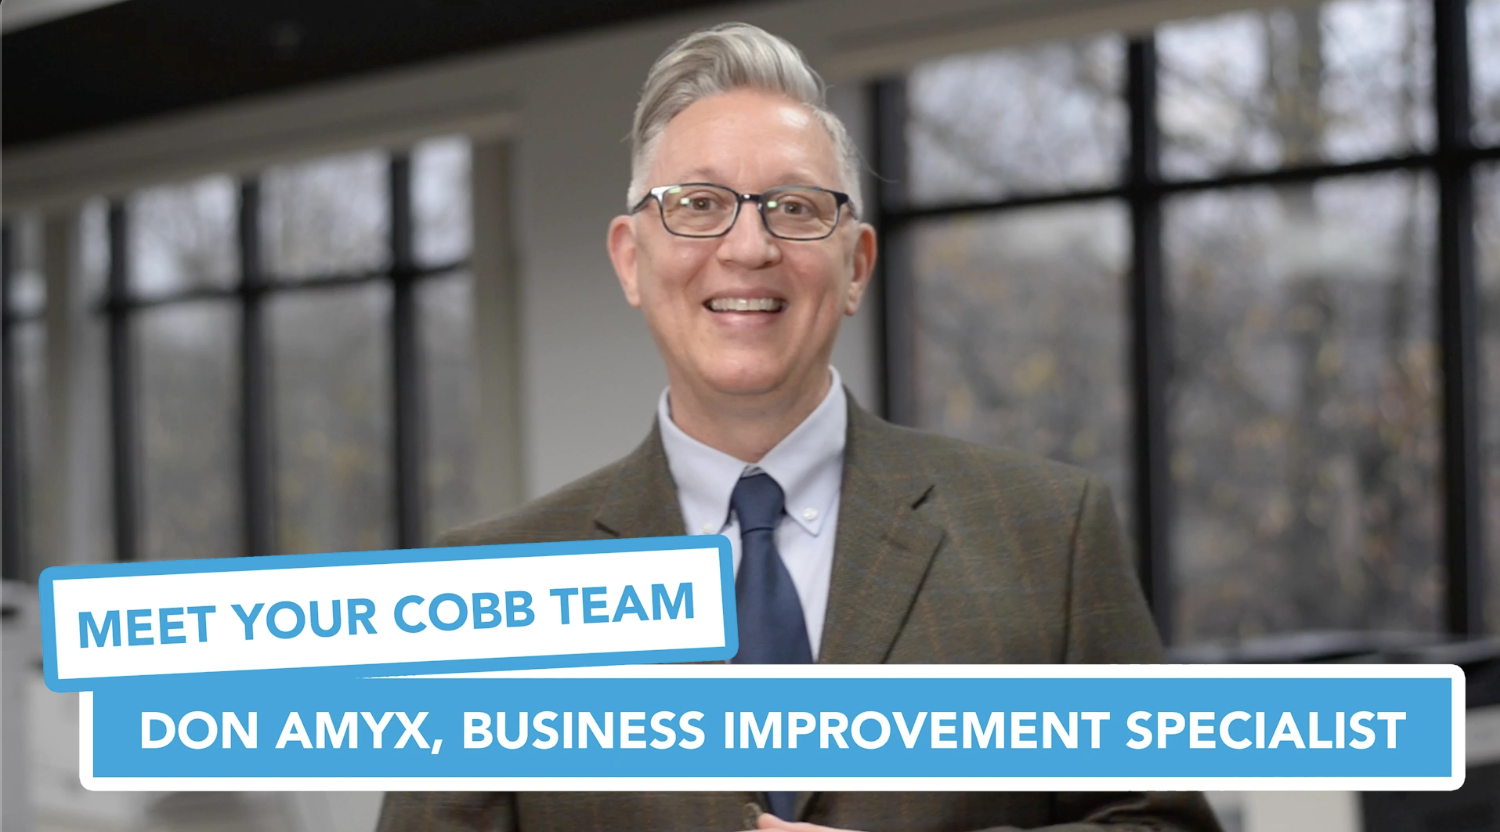 Meet Your Cobb Team: Don Amyx, Business Improvement Specialist